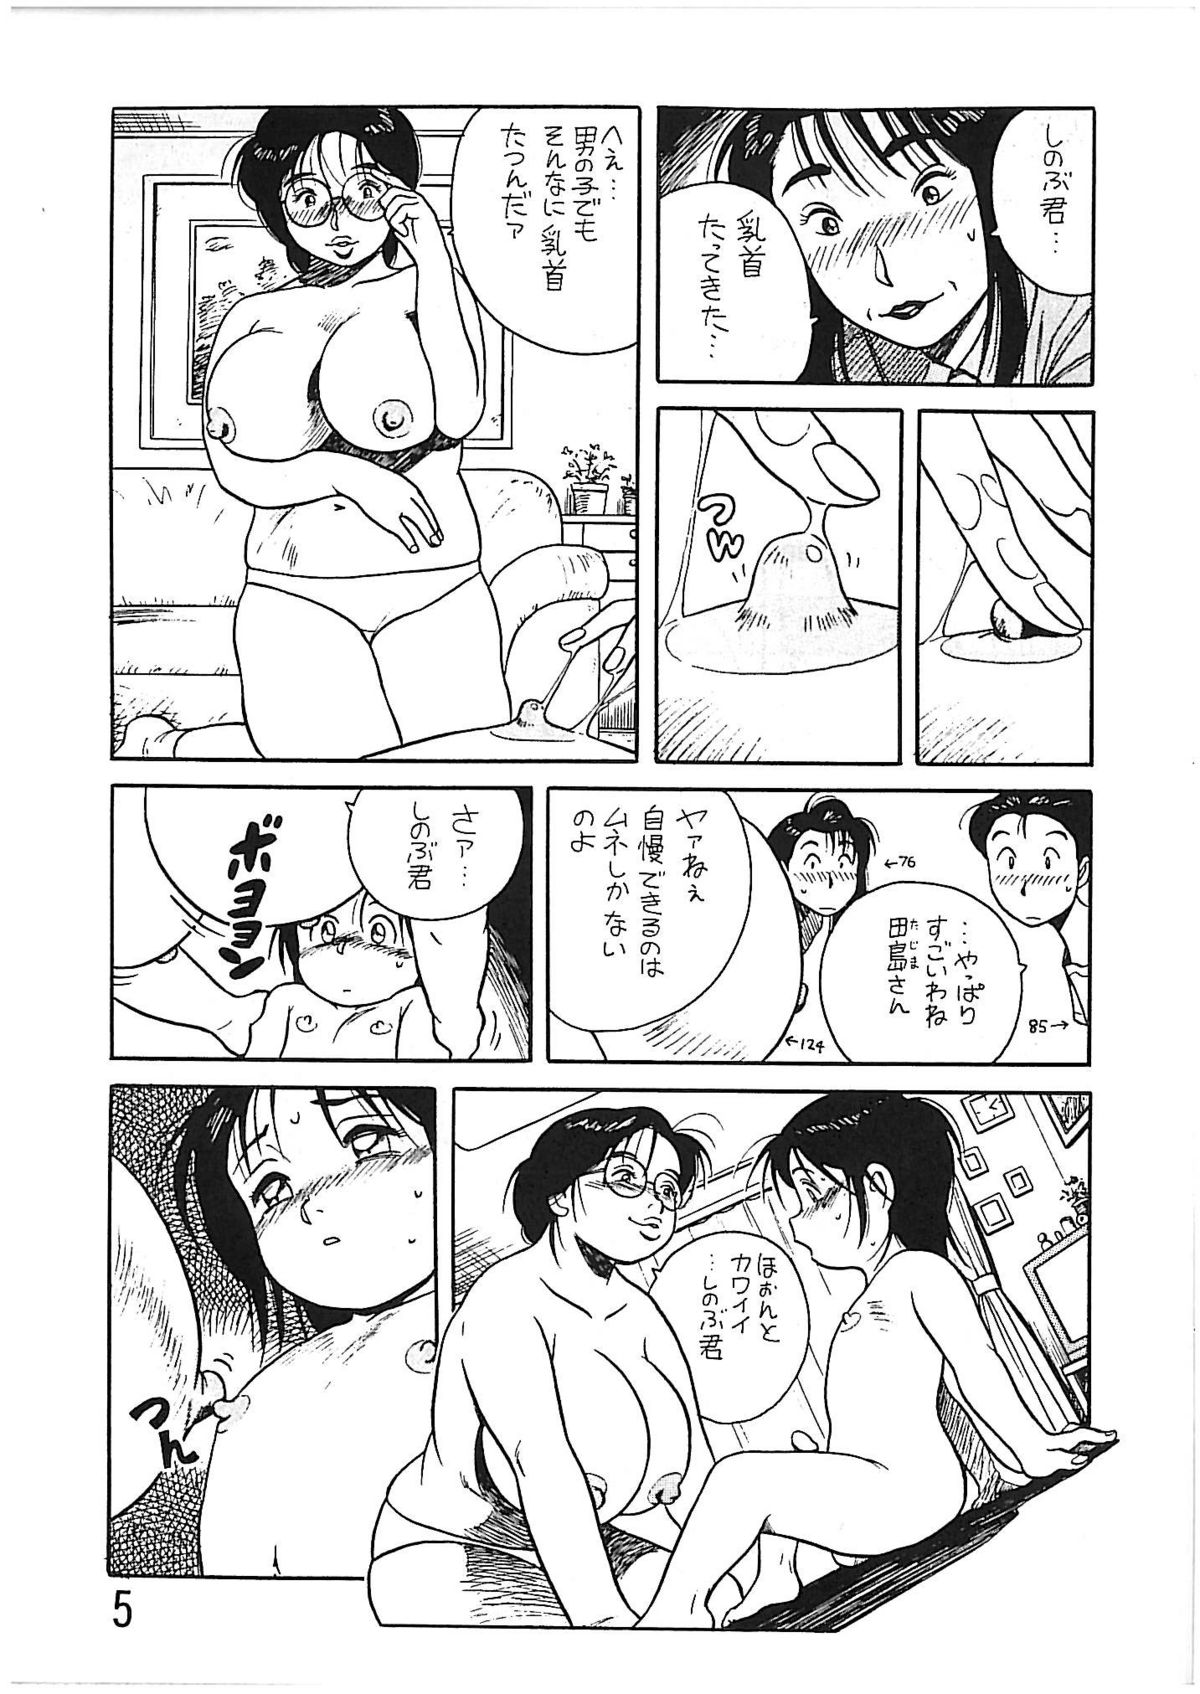 [NEW WORLD ORDER (Anda Daichi)] BOY'S LIFE CORE 2 page 4 full